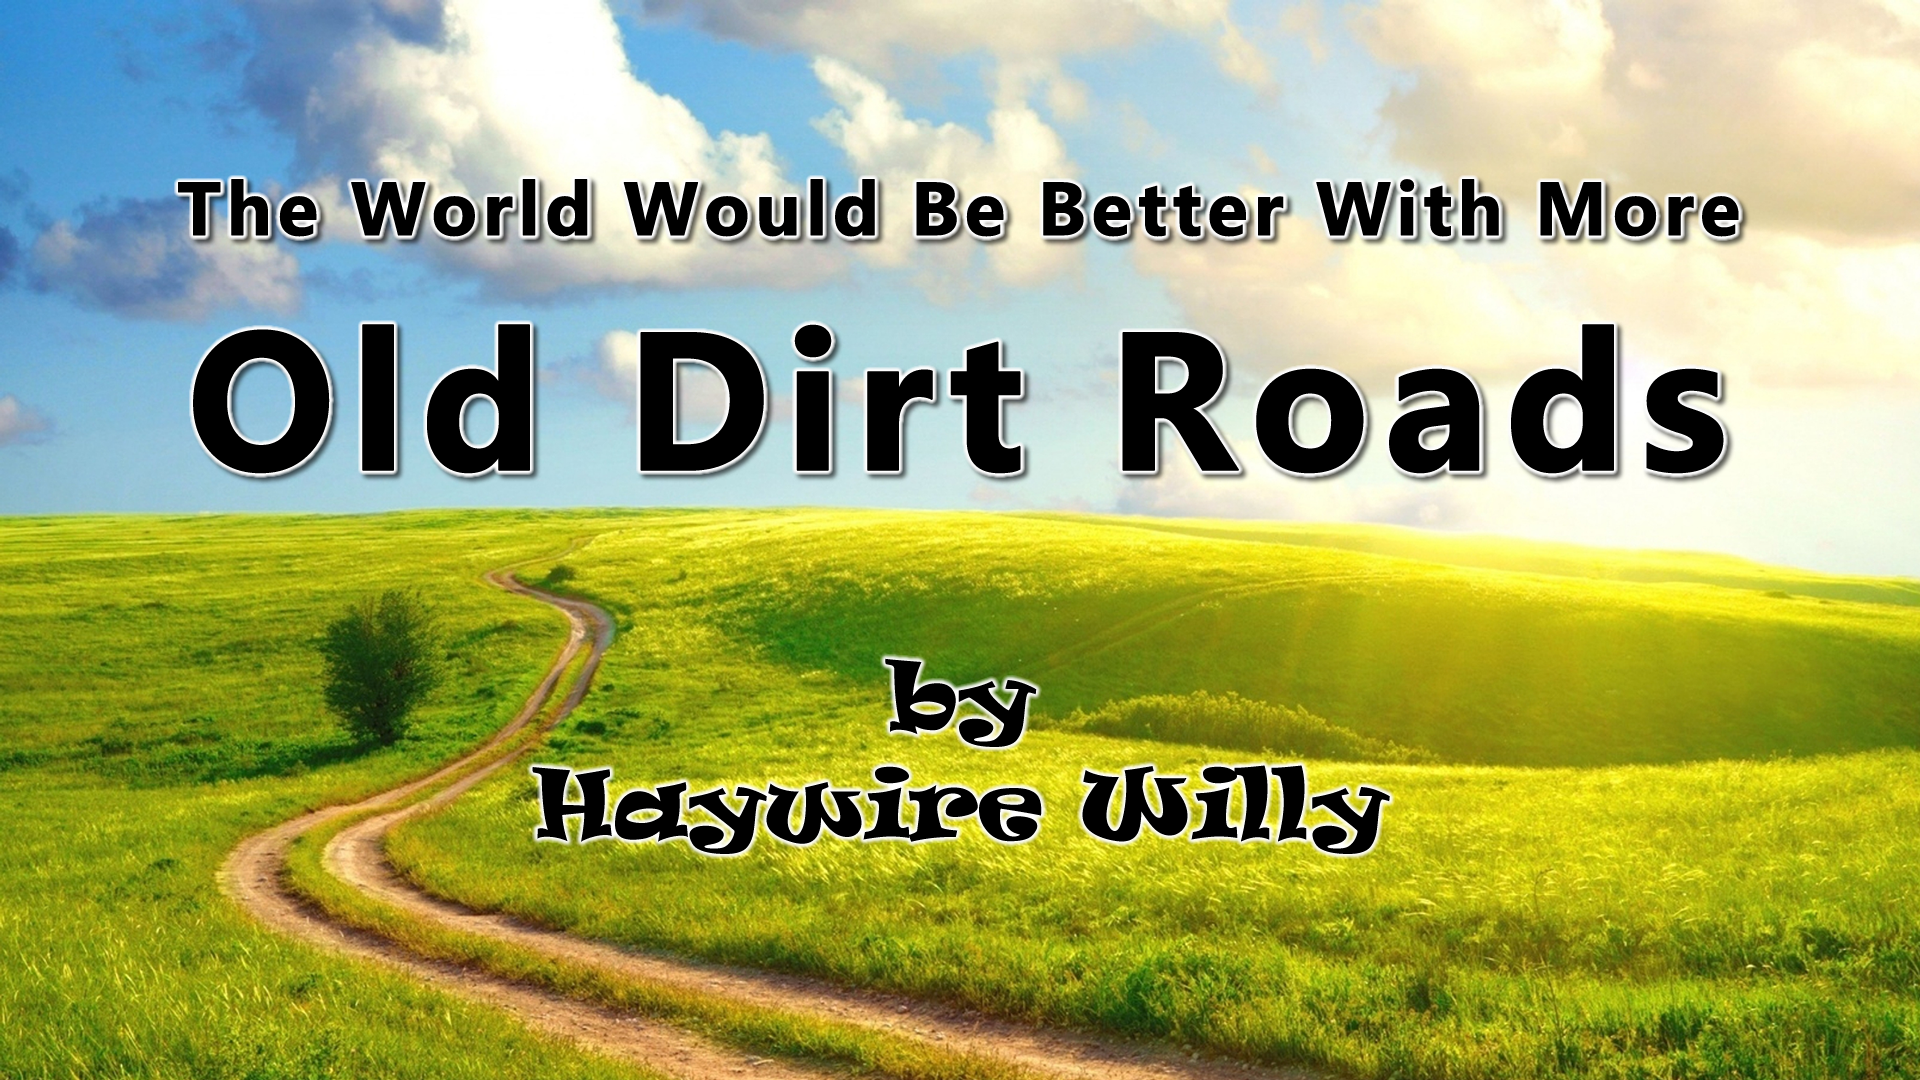 Old Dirt Roads video